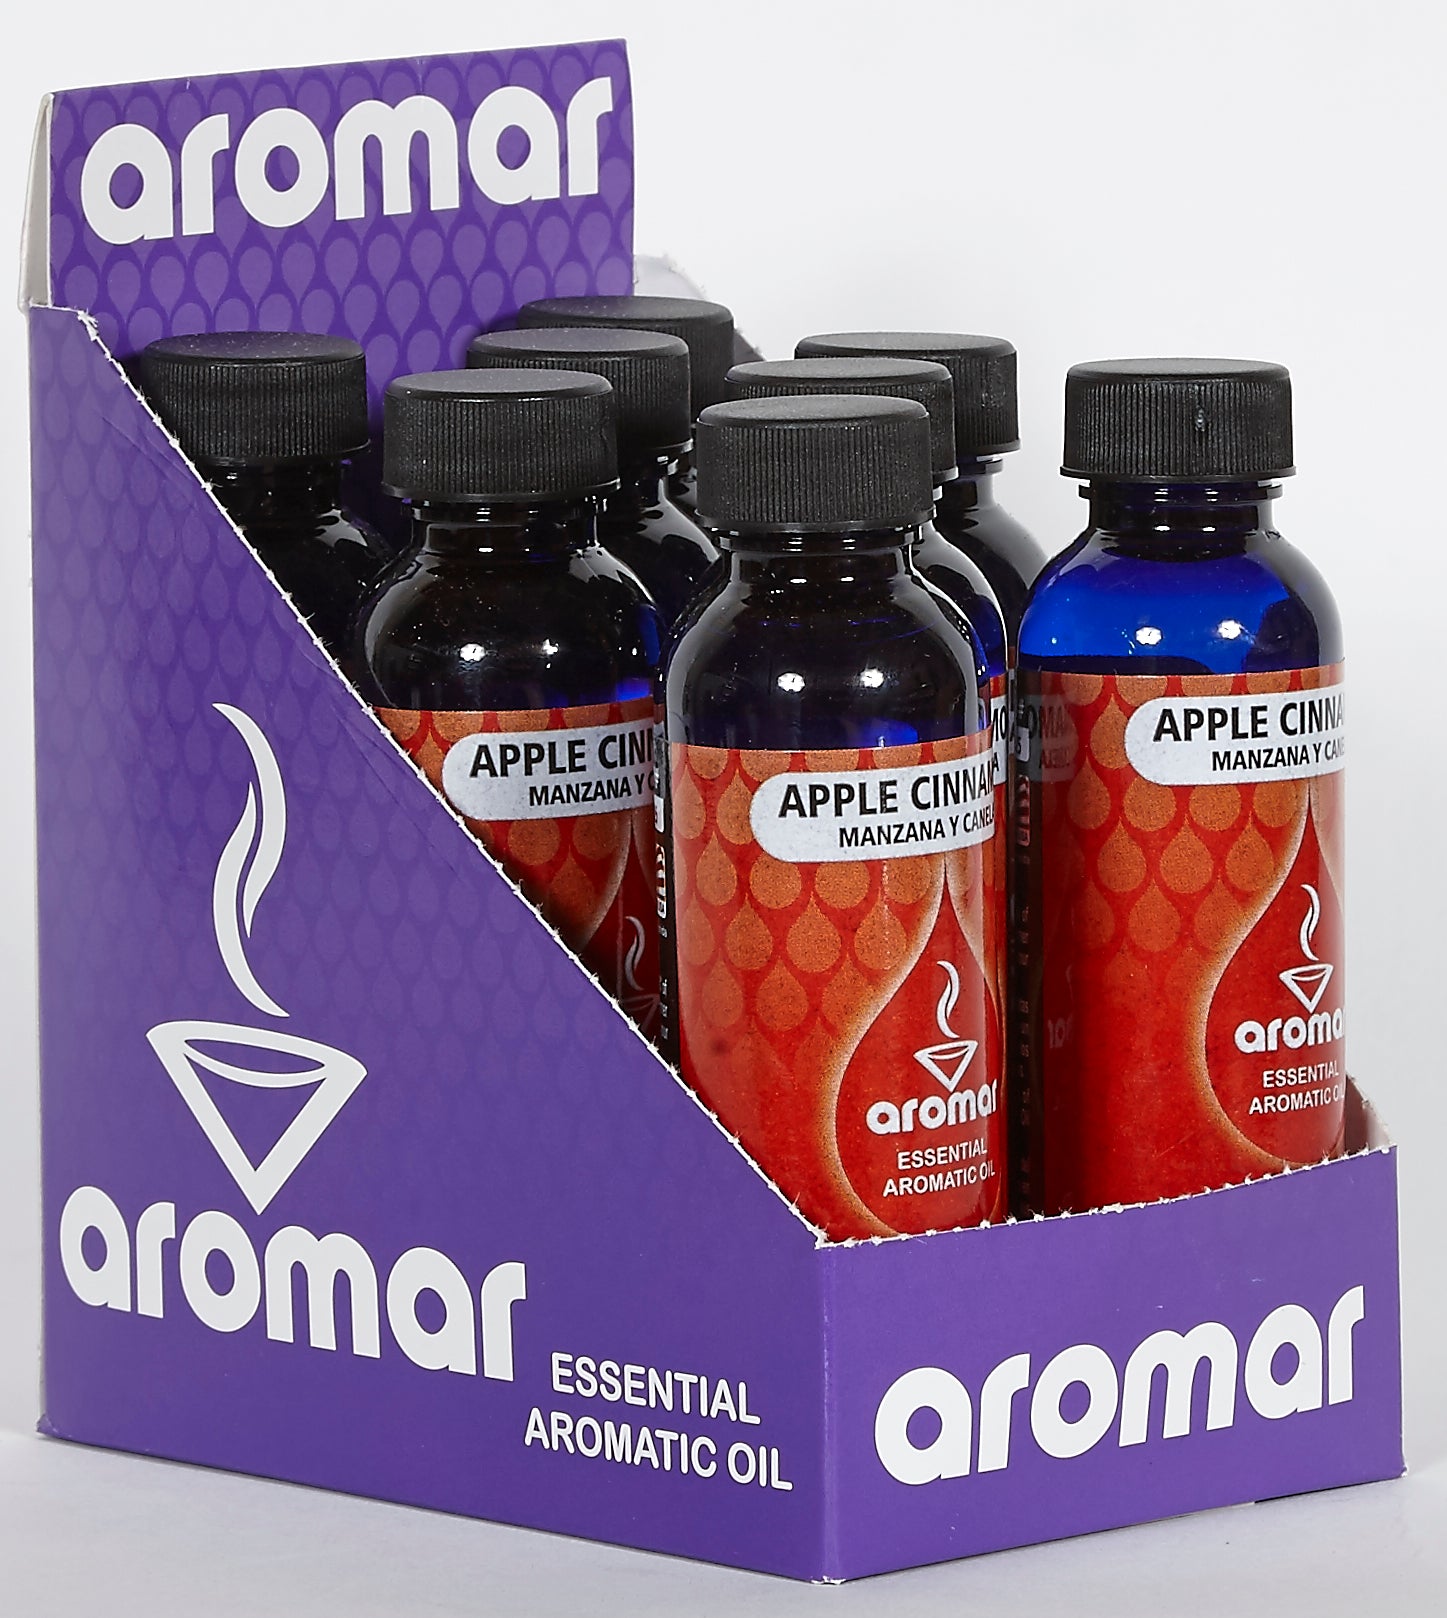 Aromar Fragrance Aromatic Oil Chocolate Rasberries fragrance 2.2 OZ –  Patterson & Yates Variety LLC